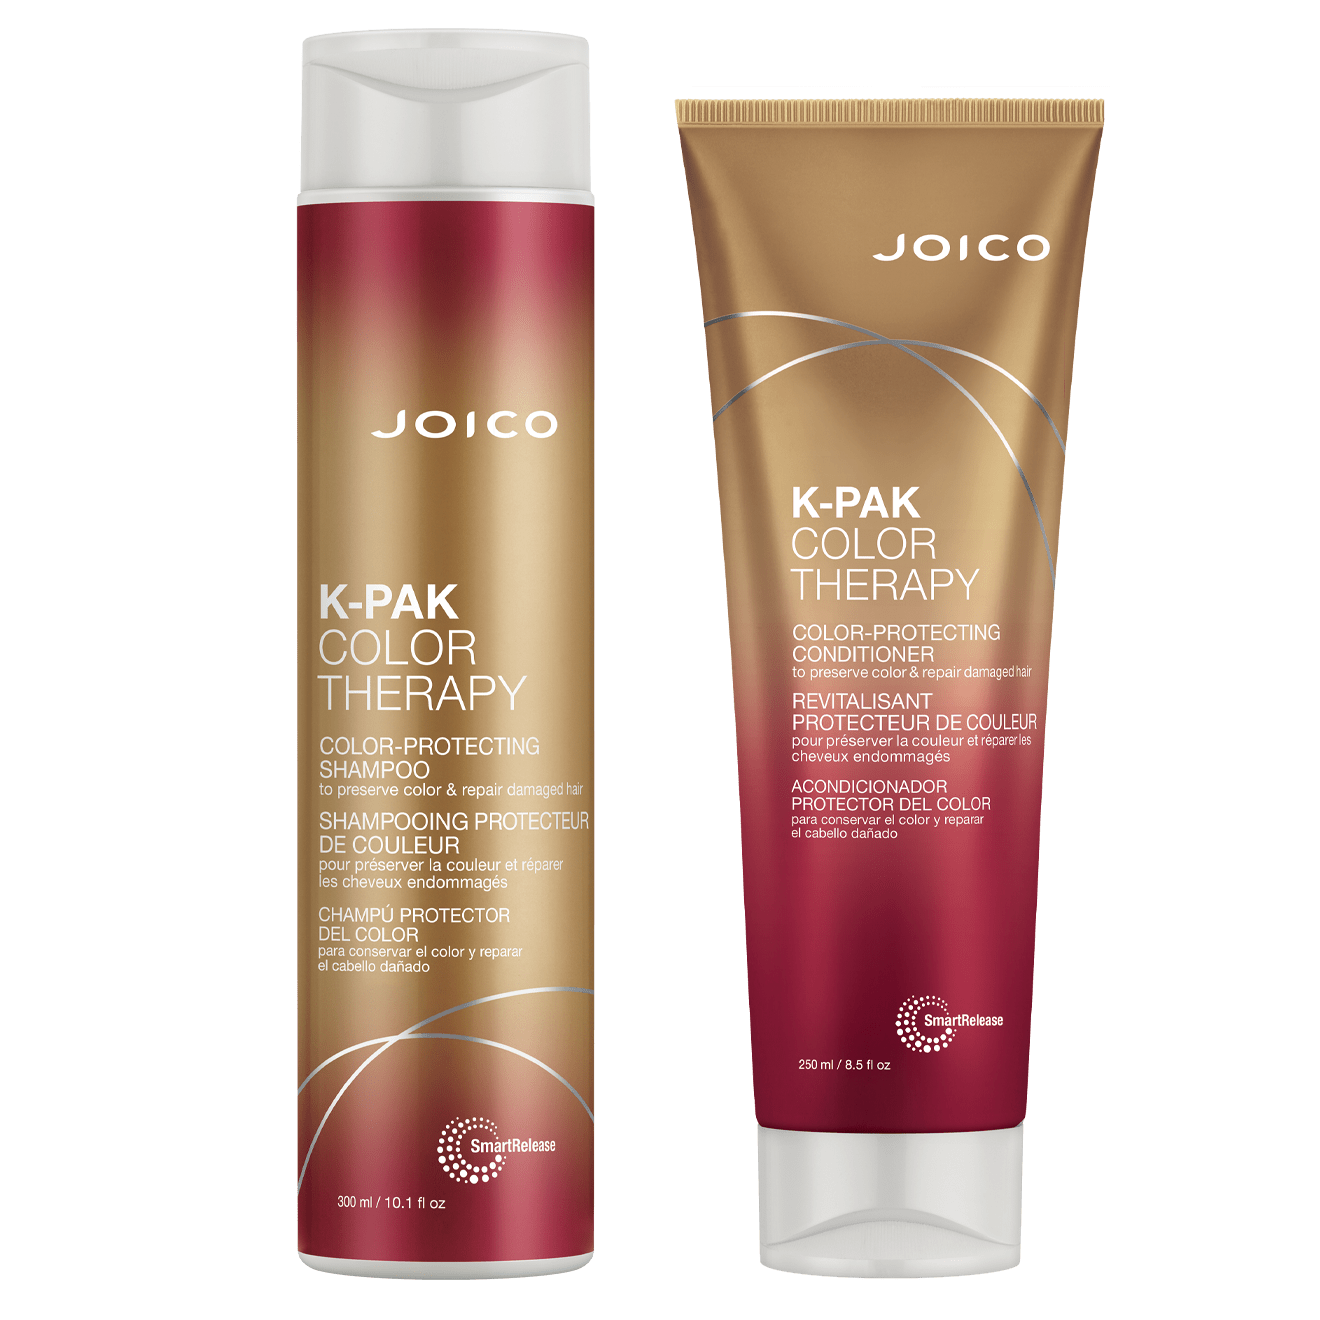 K-PAK Color Therapy Shampoo & Conditioner Duo